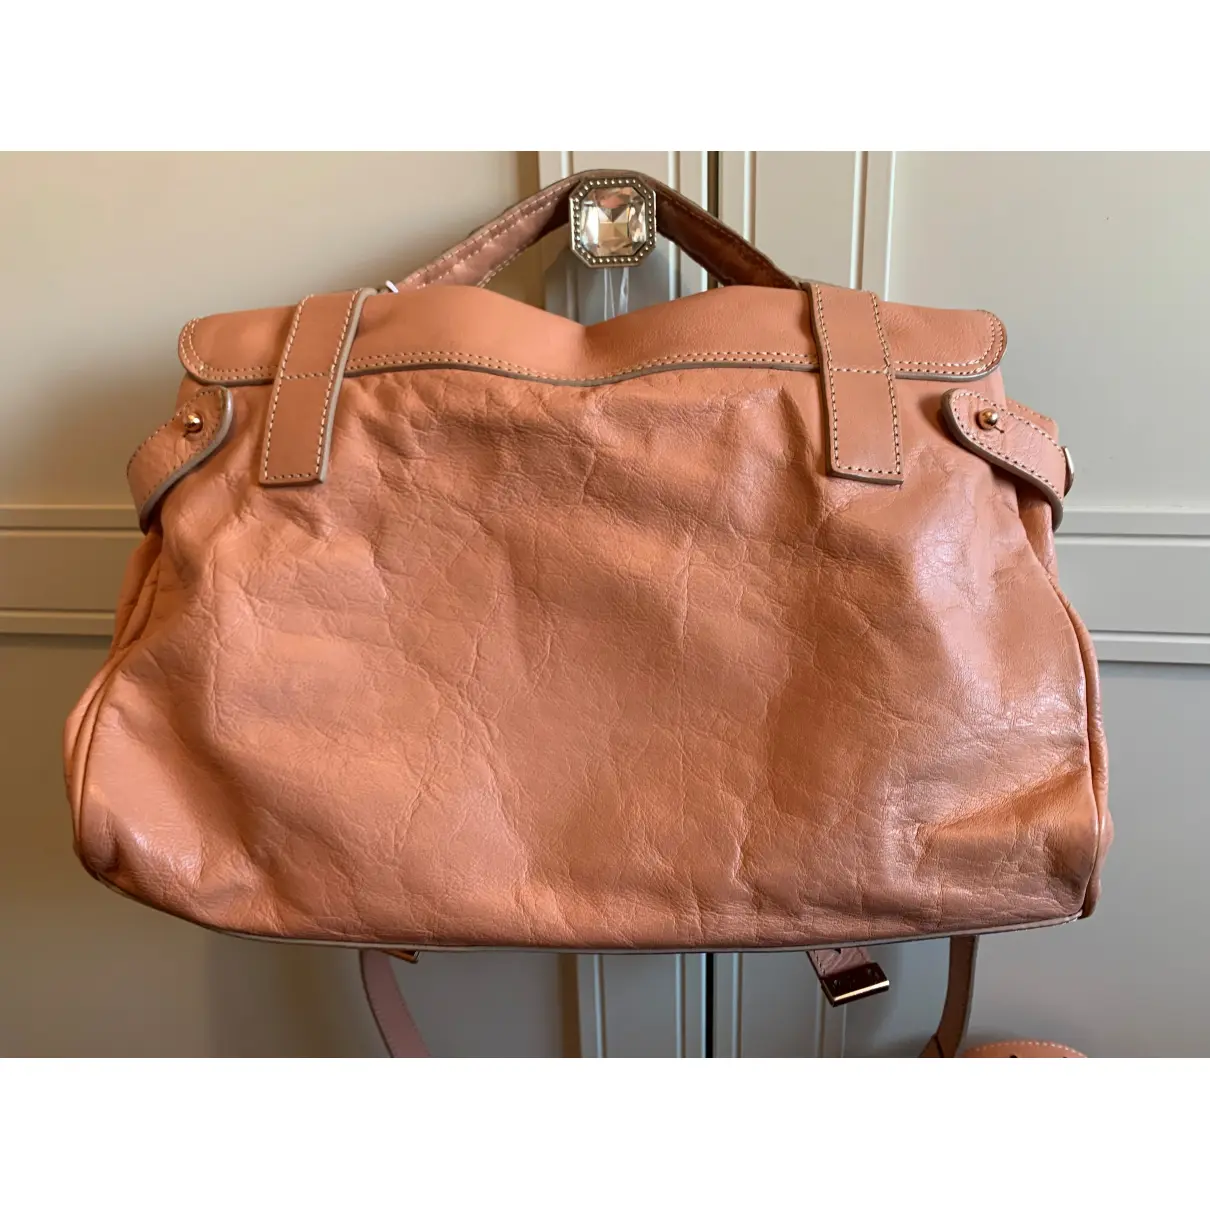 Buy Mulberry Alexa leather handbag online - Vintage